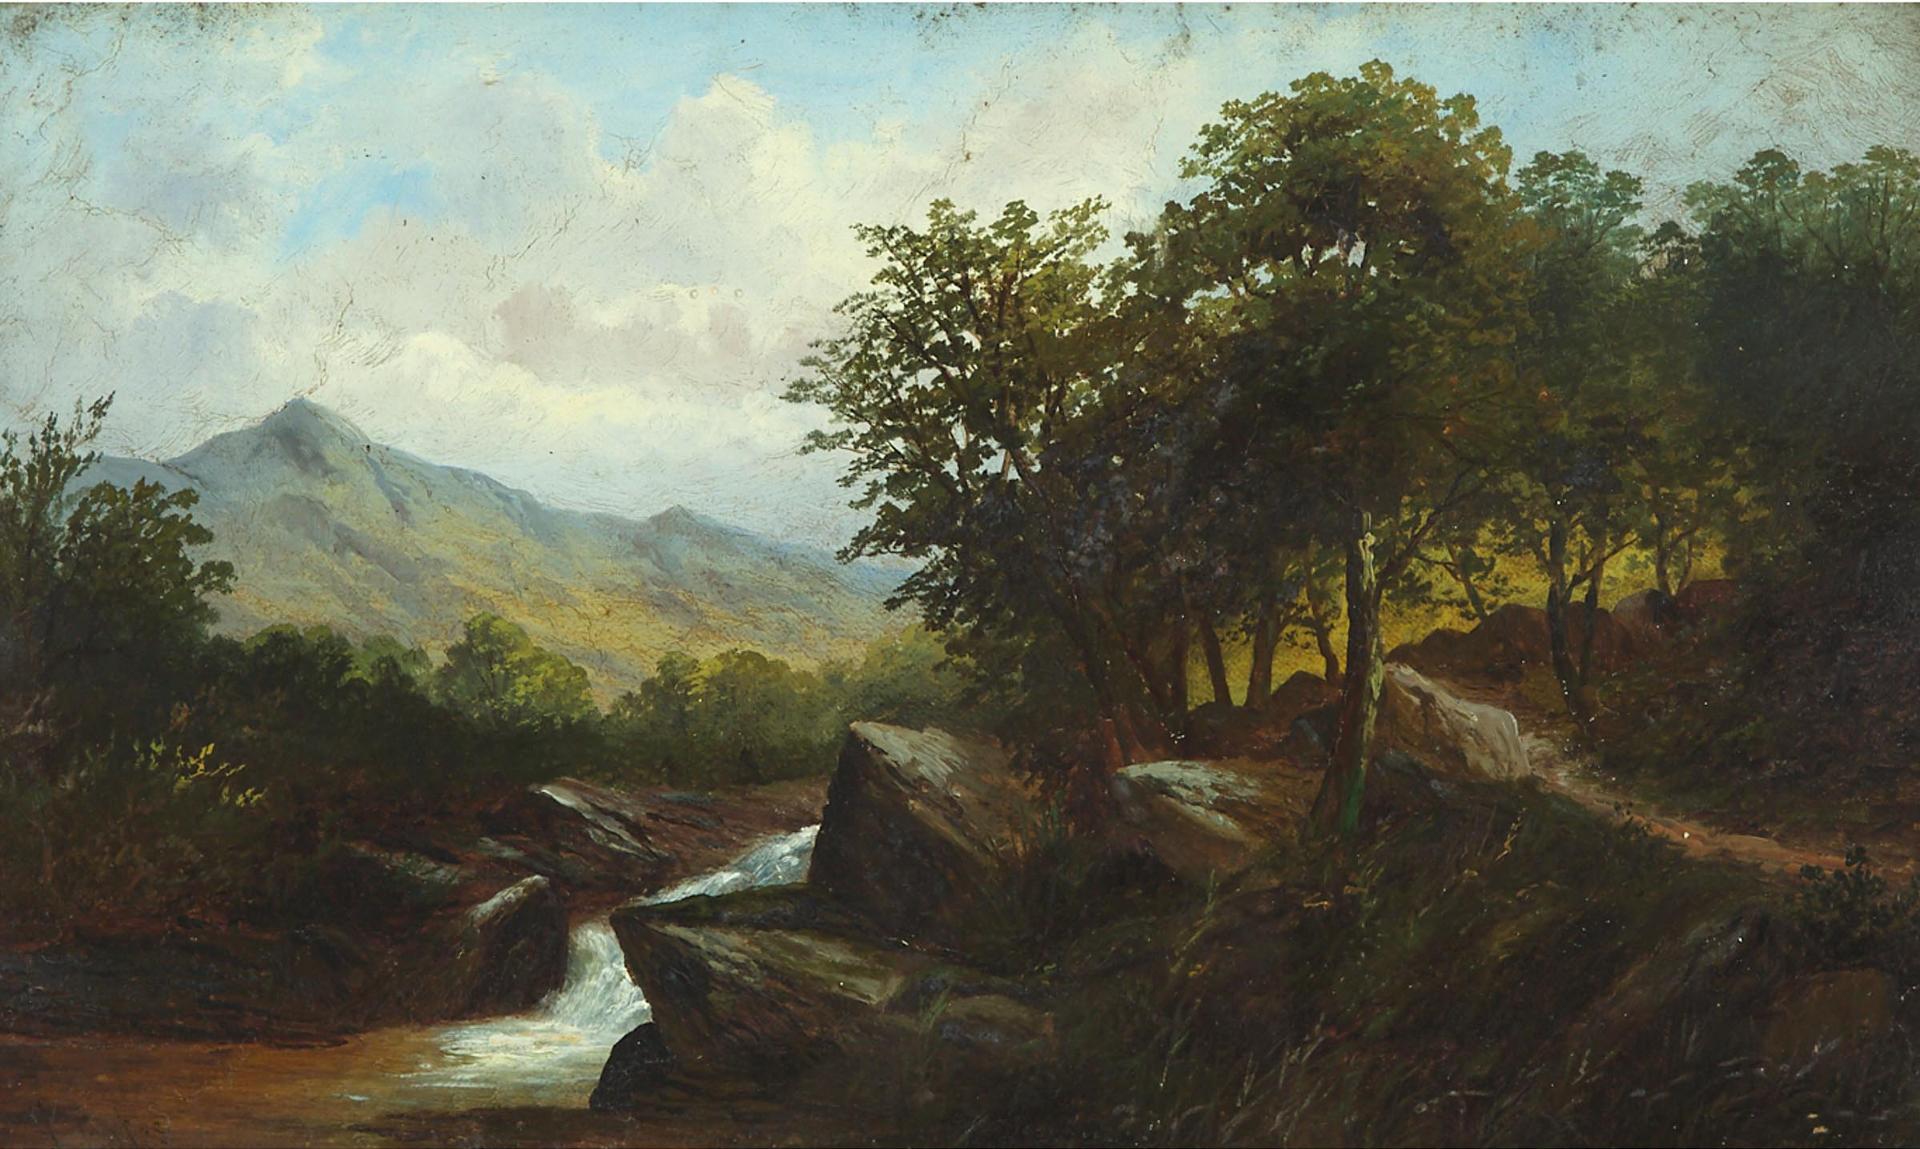 George William Bates (1930-2009) - A Rapids In A Rocky Mountainous Landscape